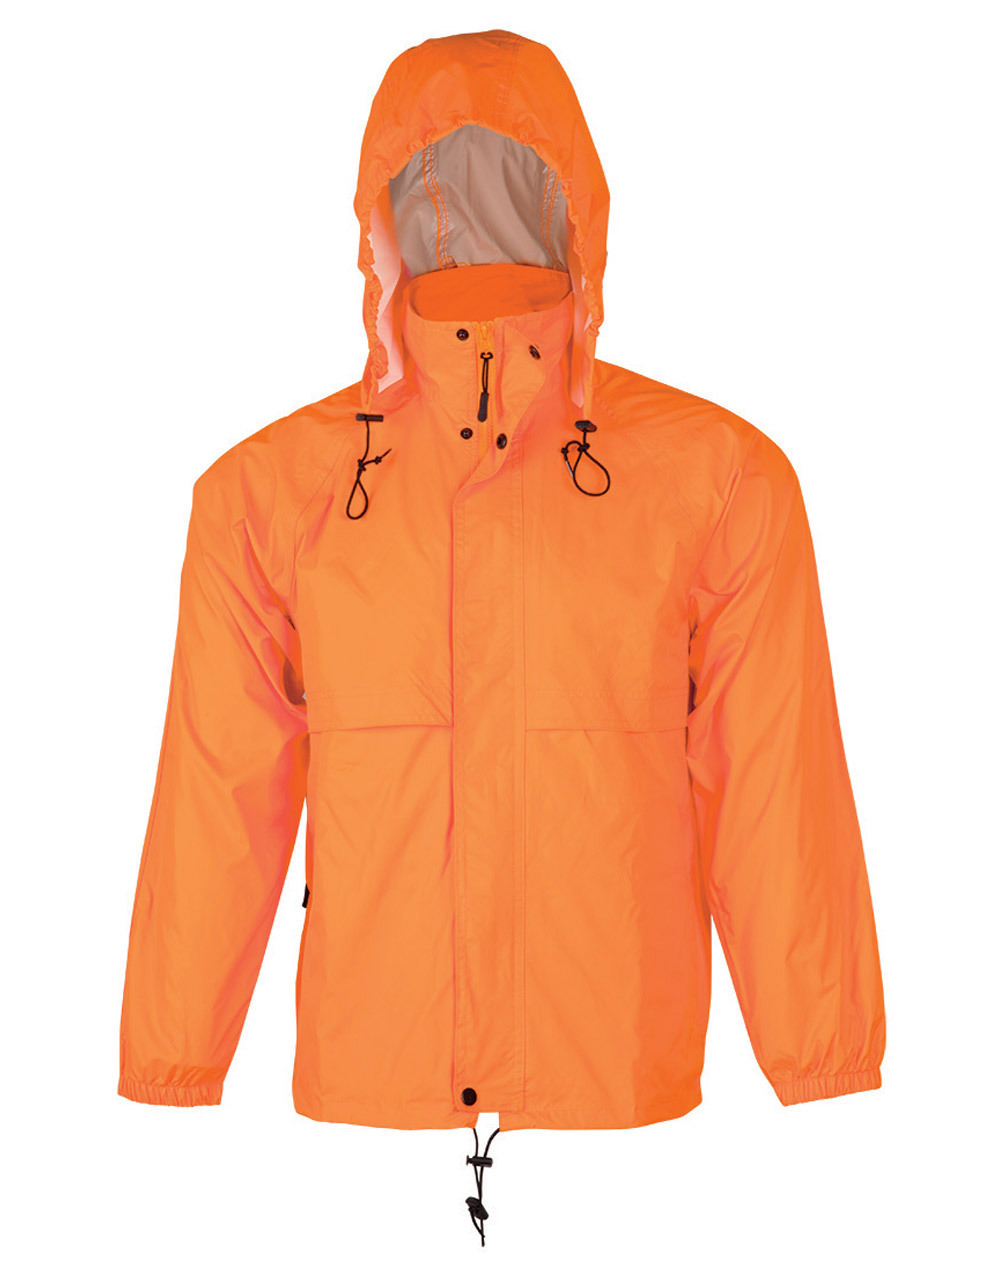 AIW SW27; High Visibility Safety Spray Rain Jacket; 100% Nylon ...